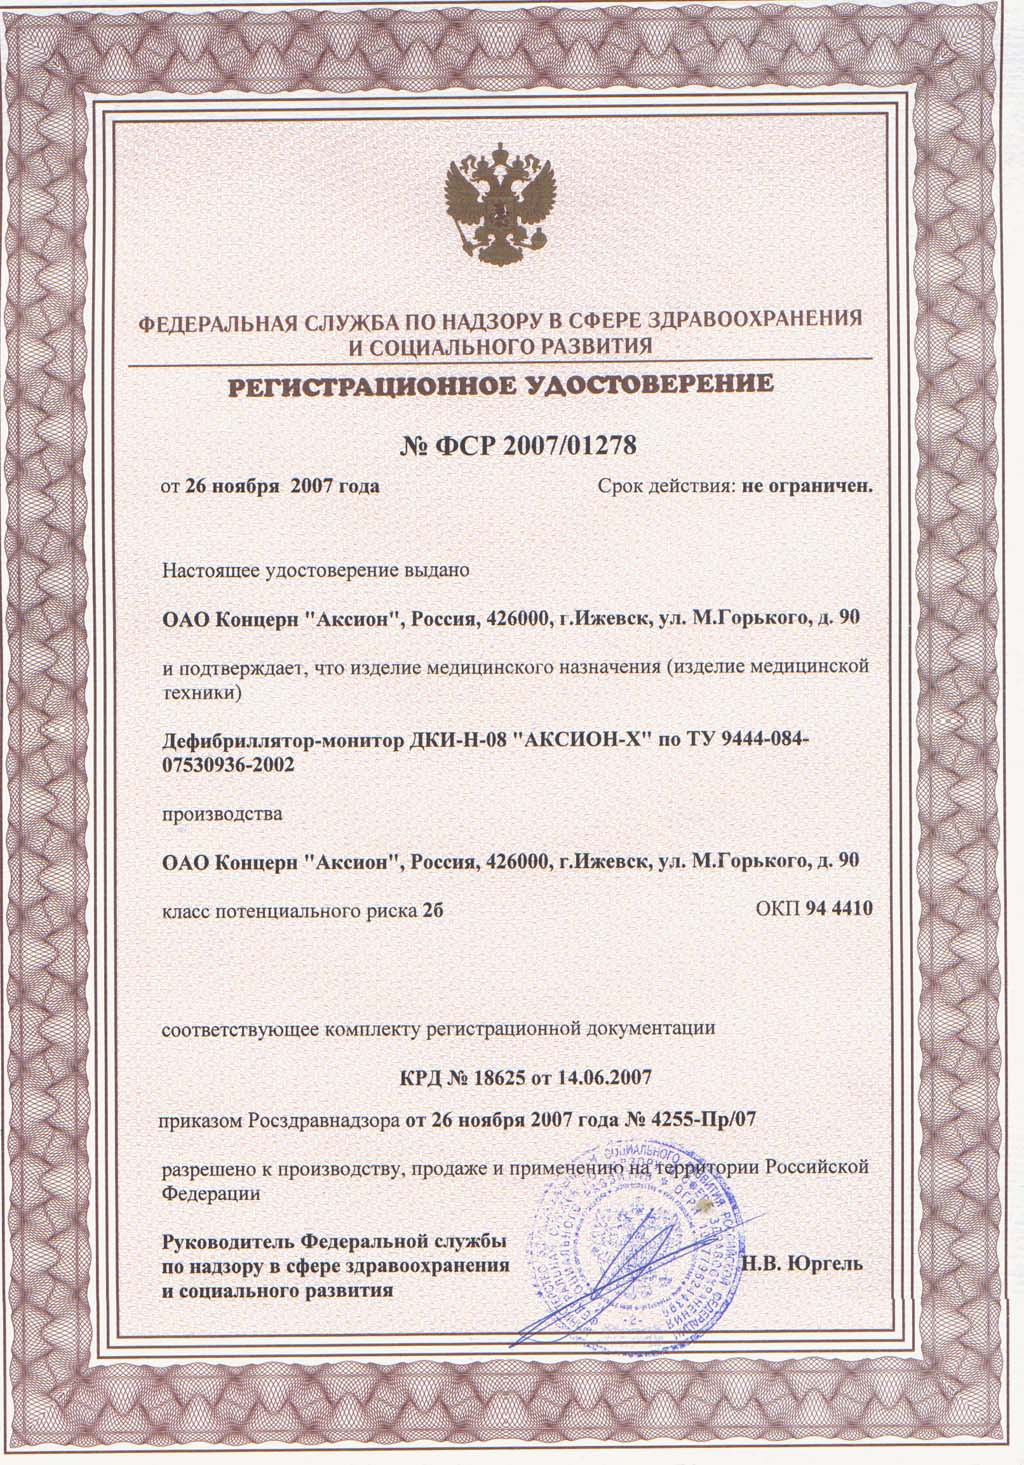 сертификат ДКИ-Н-08 - дефибриллятор